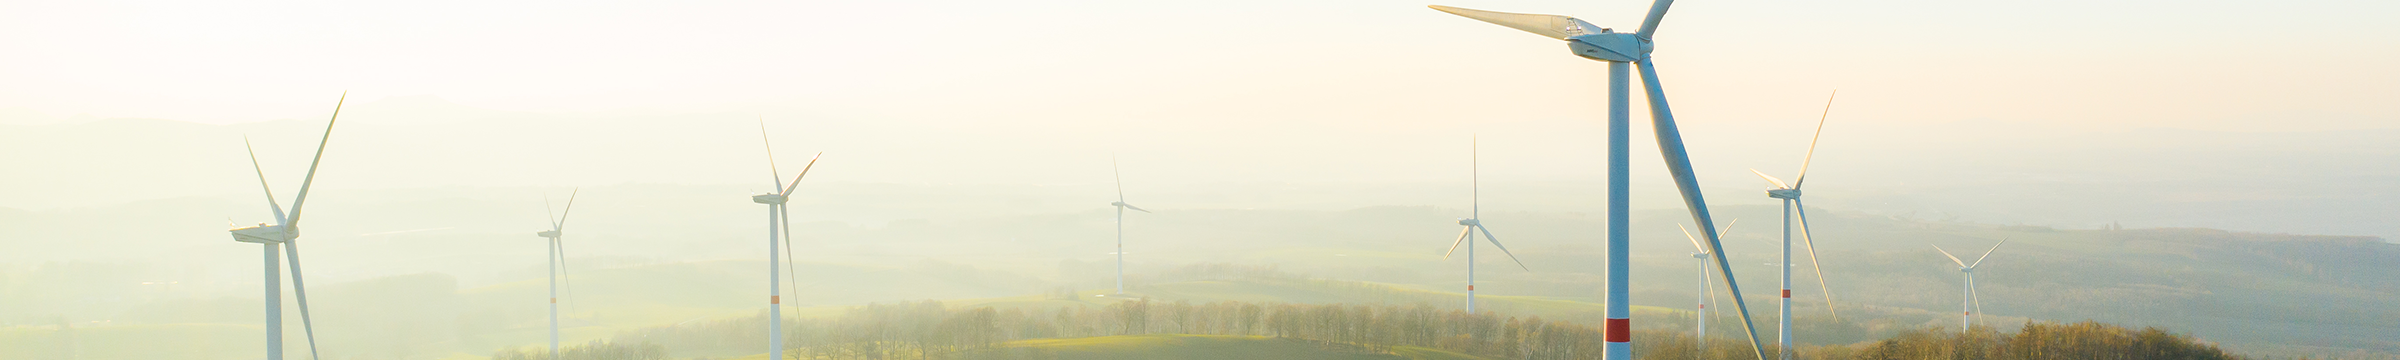 Windpark in Morgengrauen